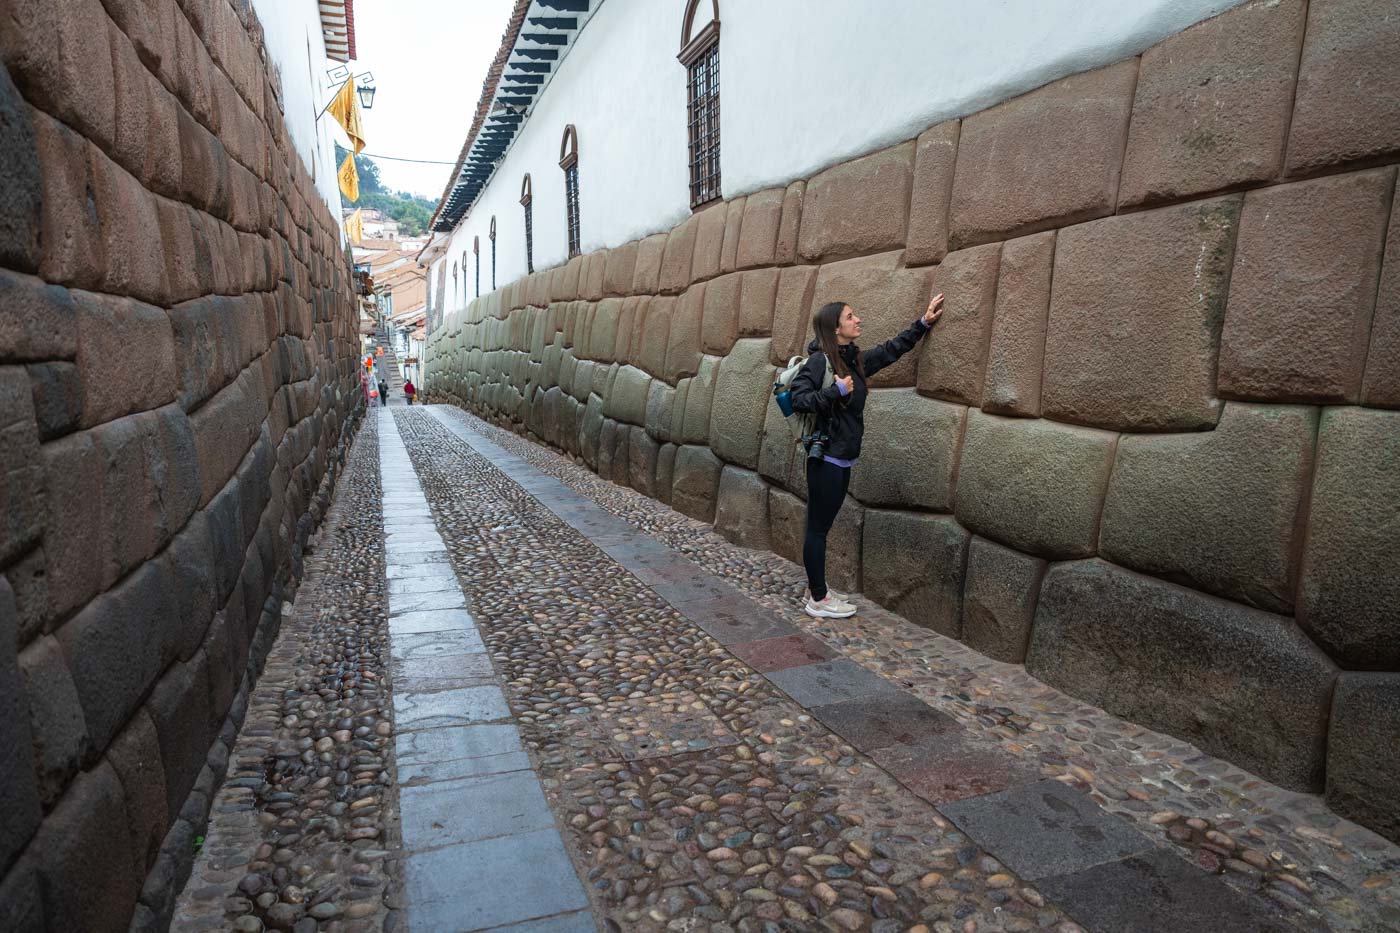 Sara stroking an old Inca wall near the Twelve Angled Stone in Cusco.